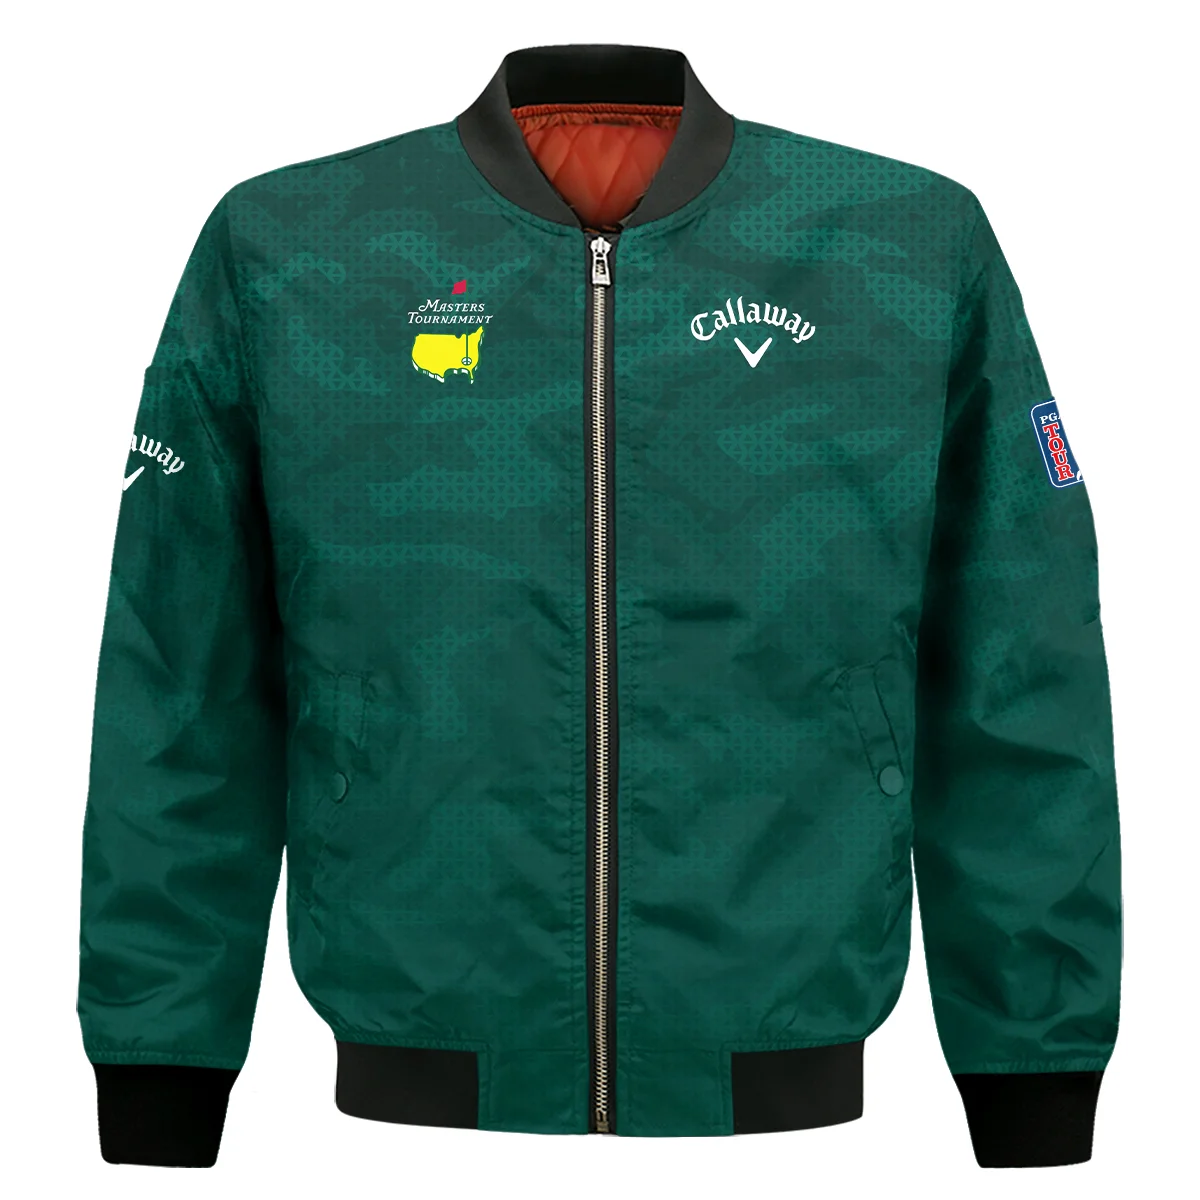 Masters Tournament Callaway Camo Sport Green Abstract Unisex Sweatshirt Style Classic Sweatshirt